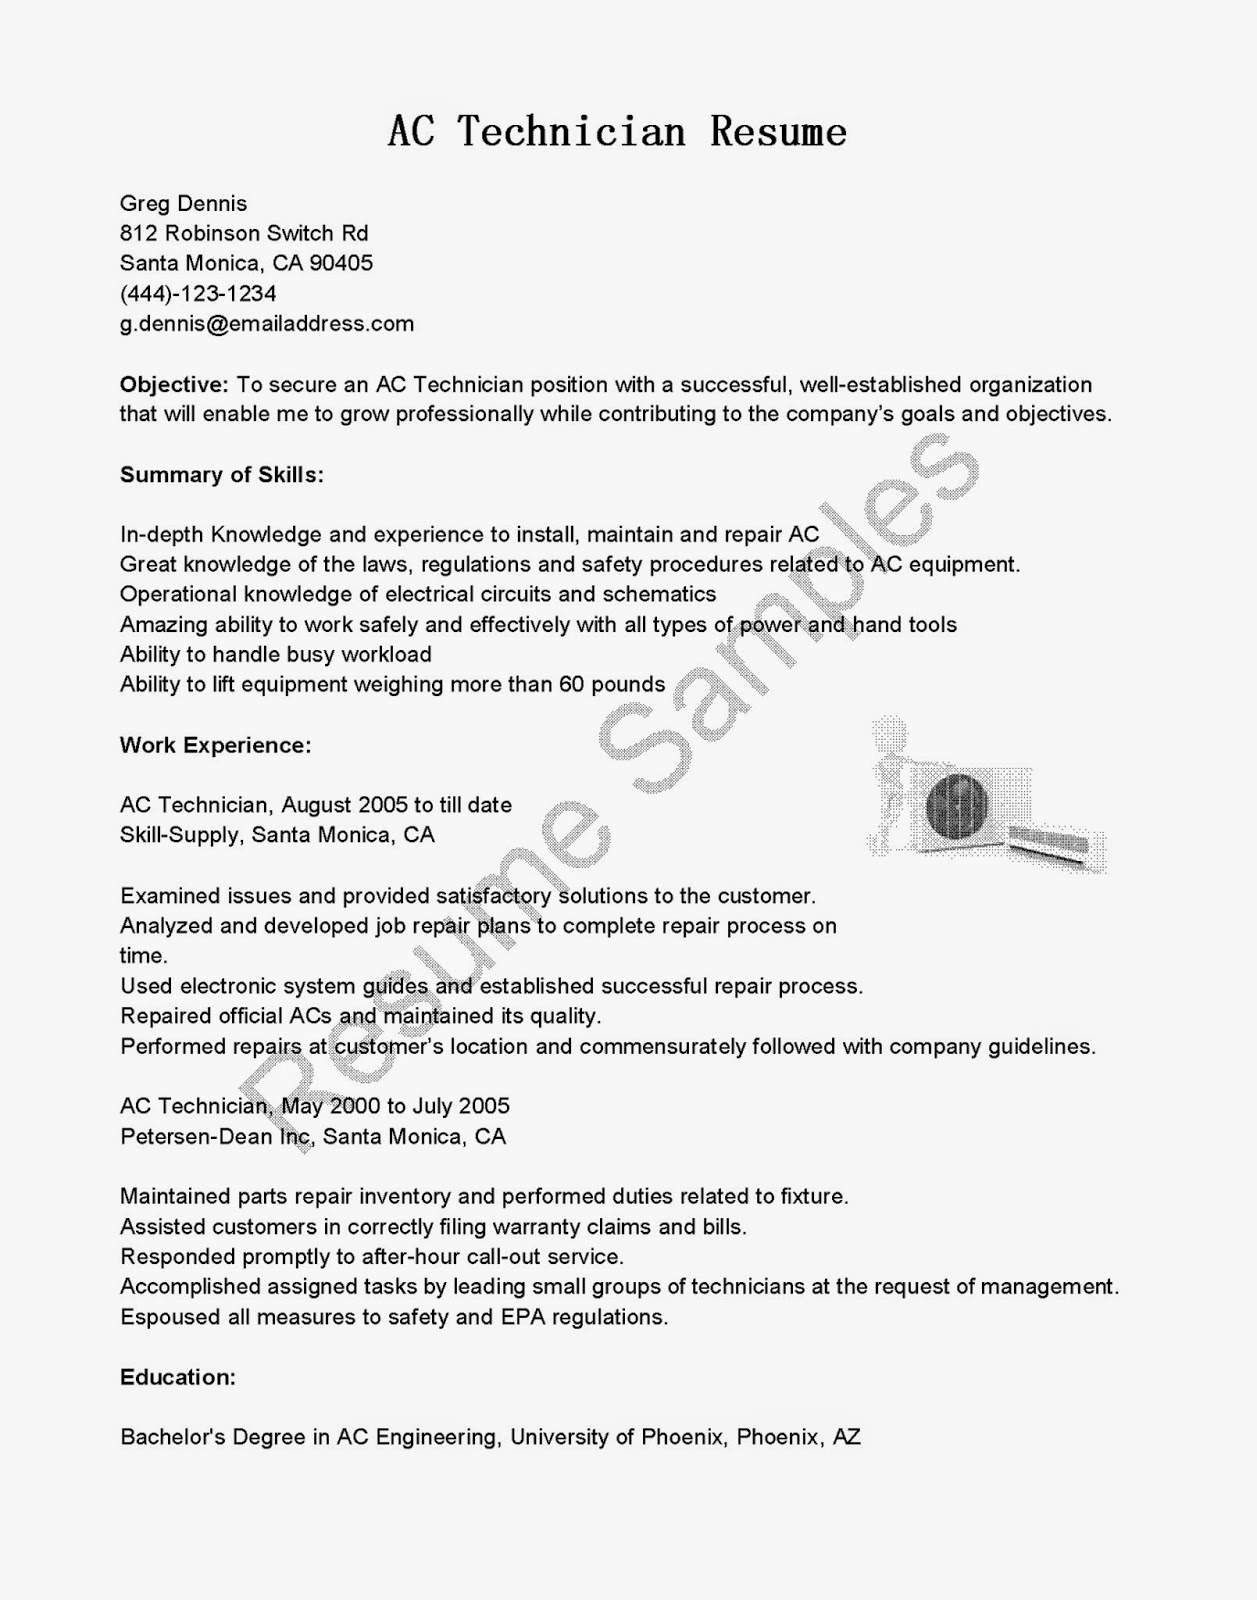 ac technician resume format india